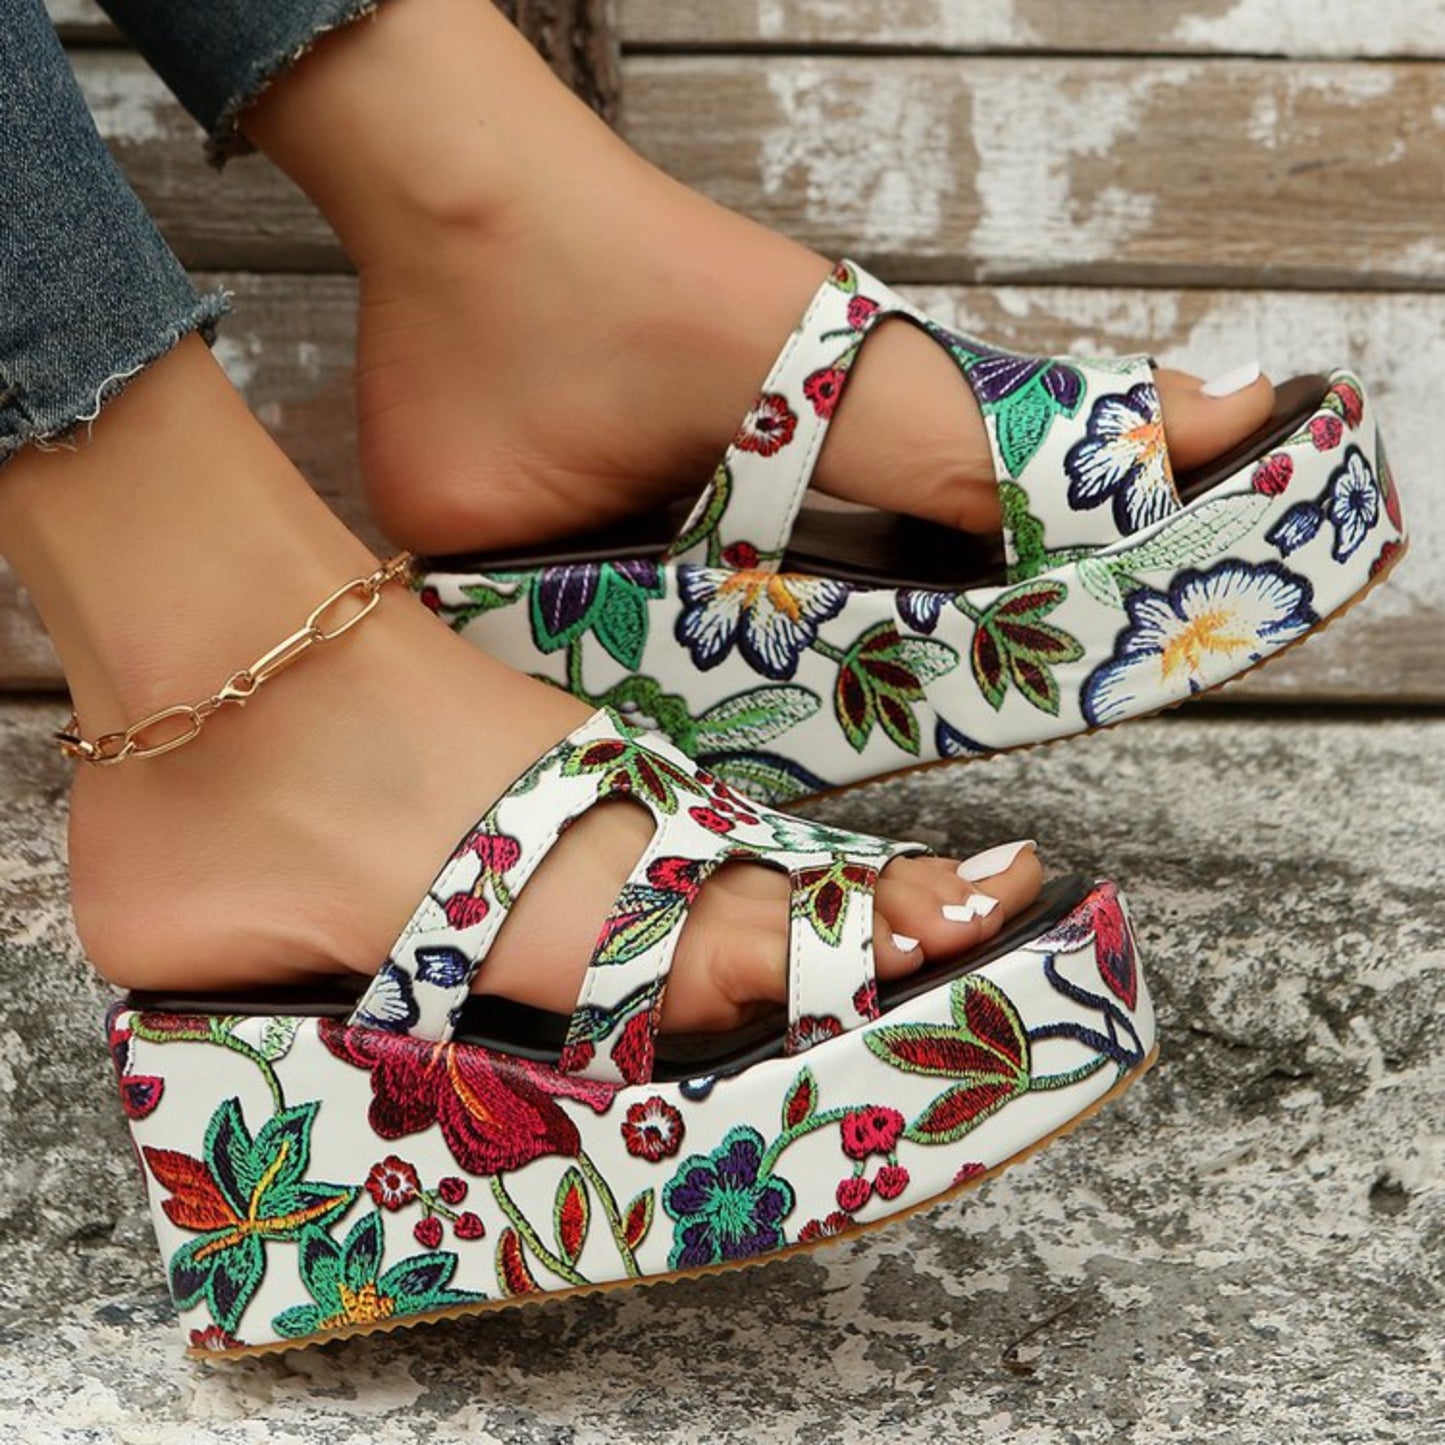 TEEK - Cutout Floral Peep Toe Sandals SHOES TEEK Trend White 4 